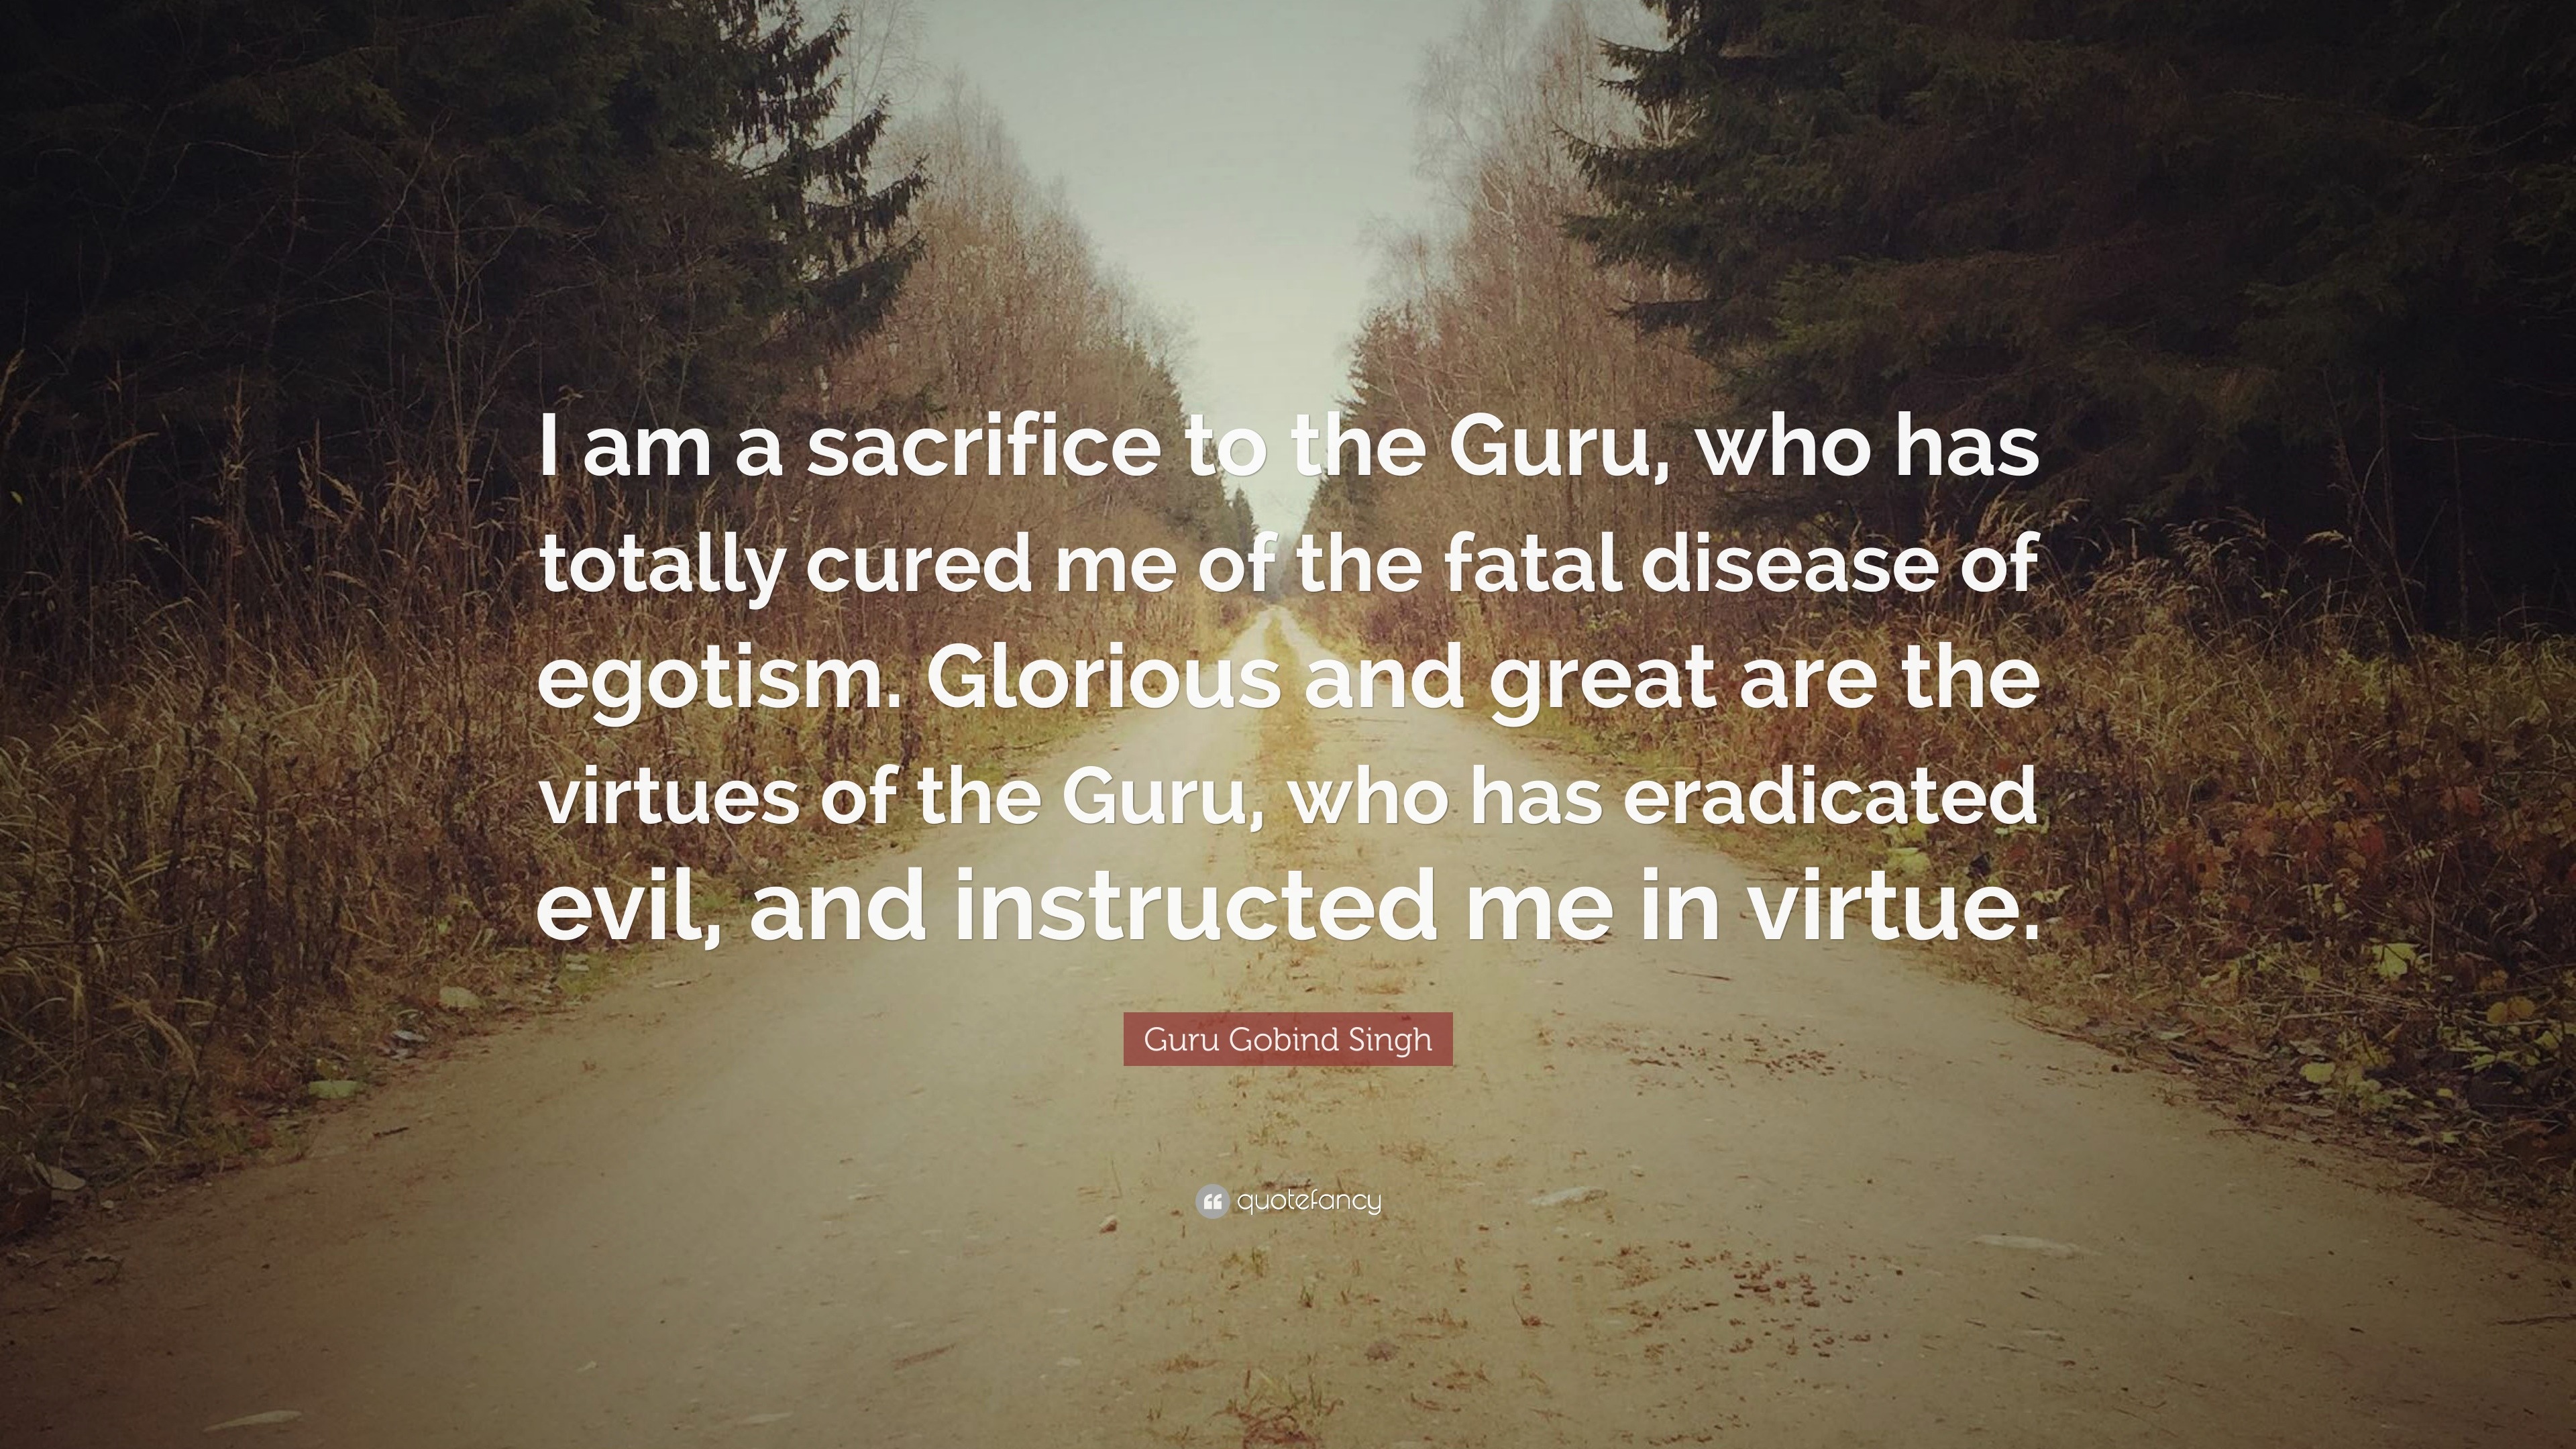 Guru Gobind Singh Quote: “I am a sacrifice to the Guru, who has totally